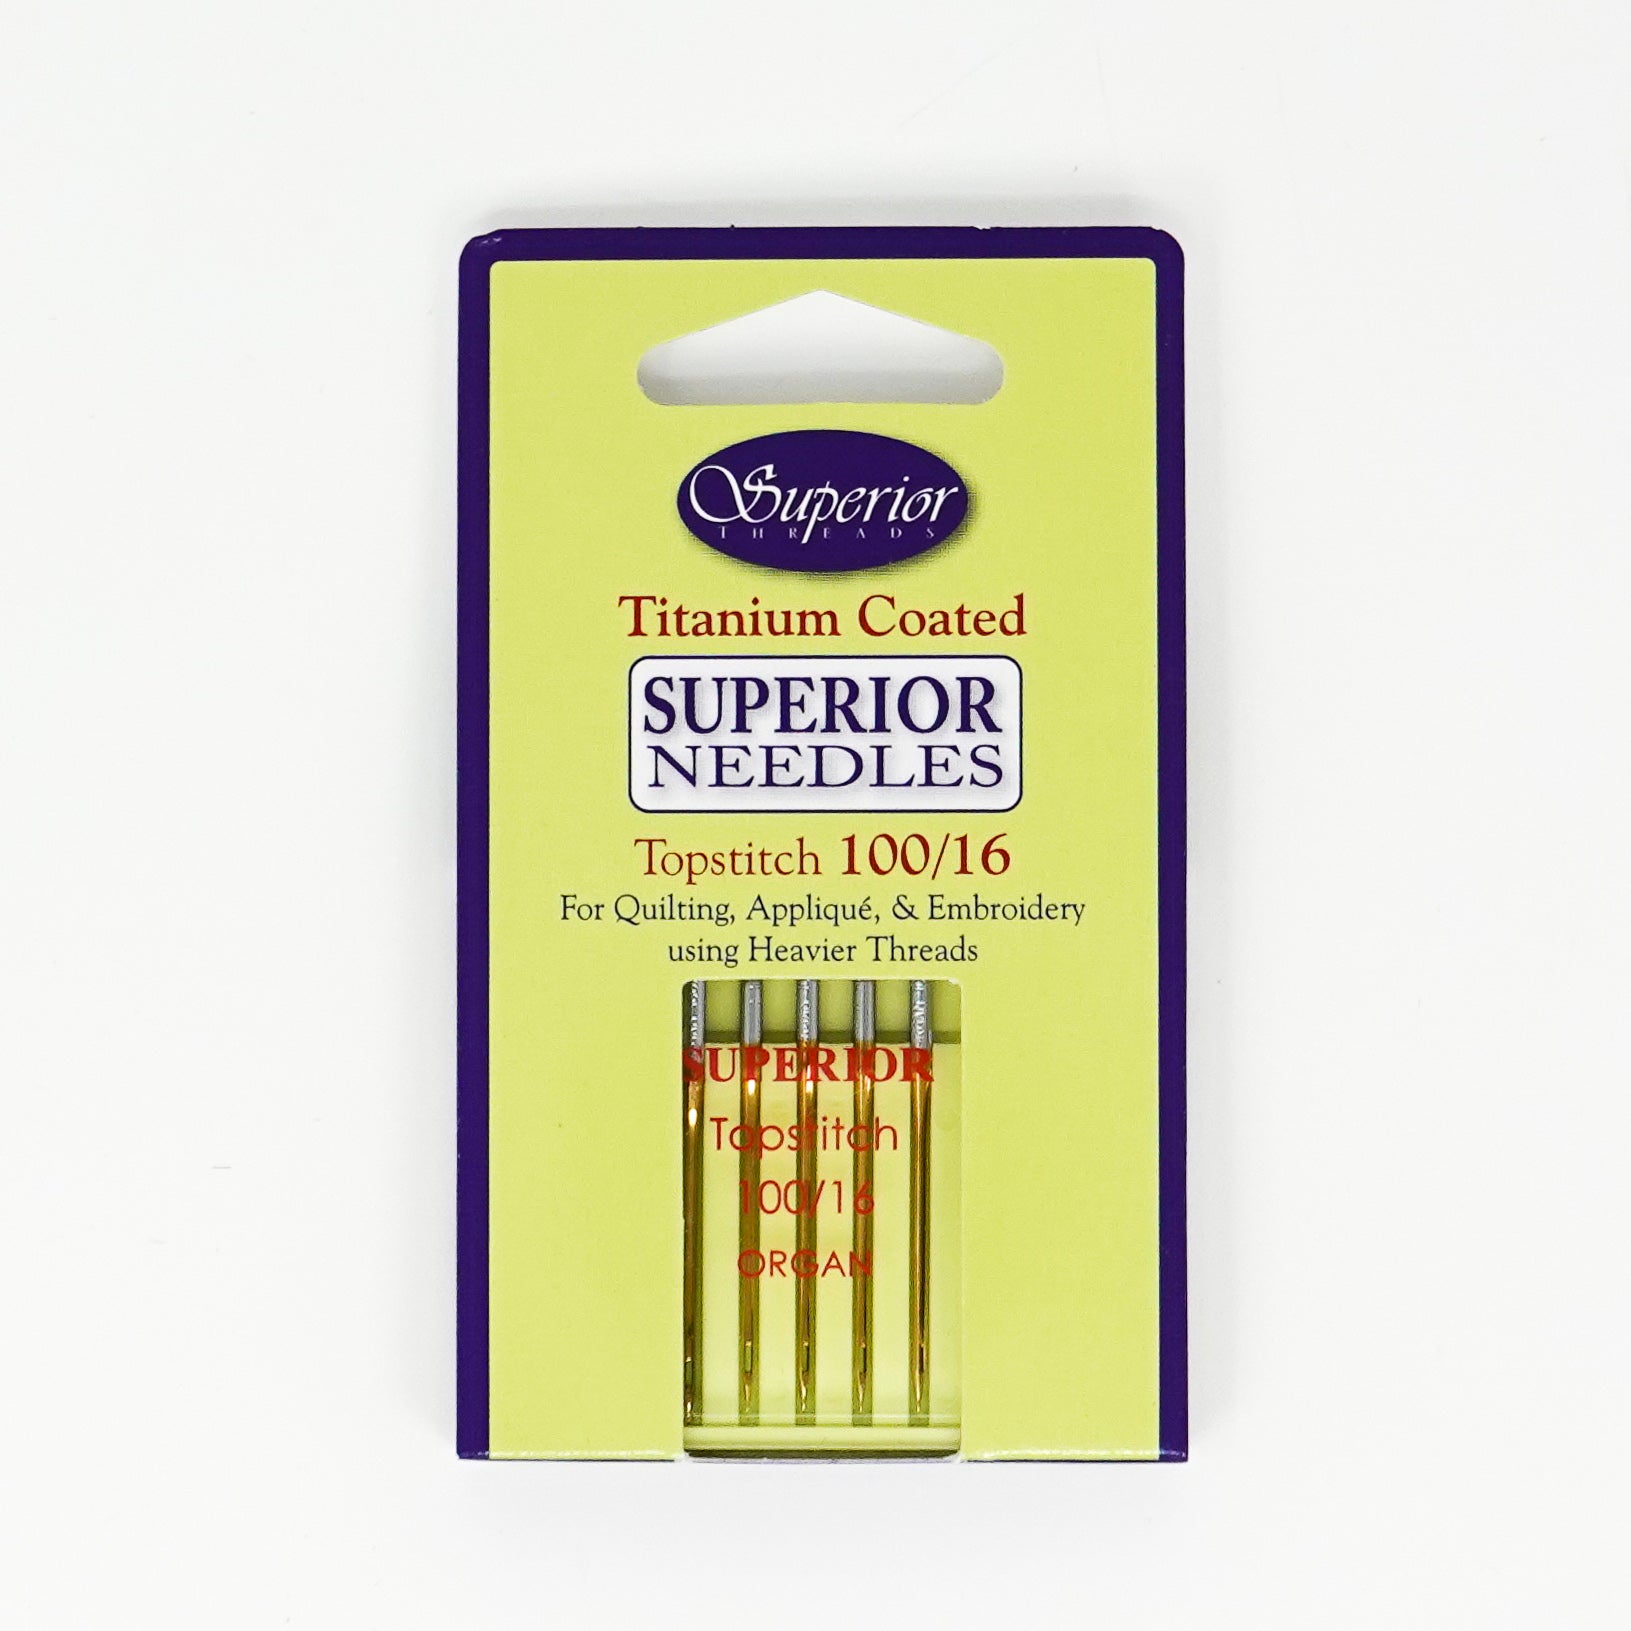 Superior Sewing Machine Needles - Topstitch - 16/100 - set of 5